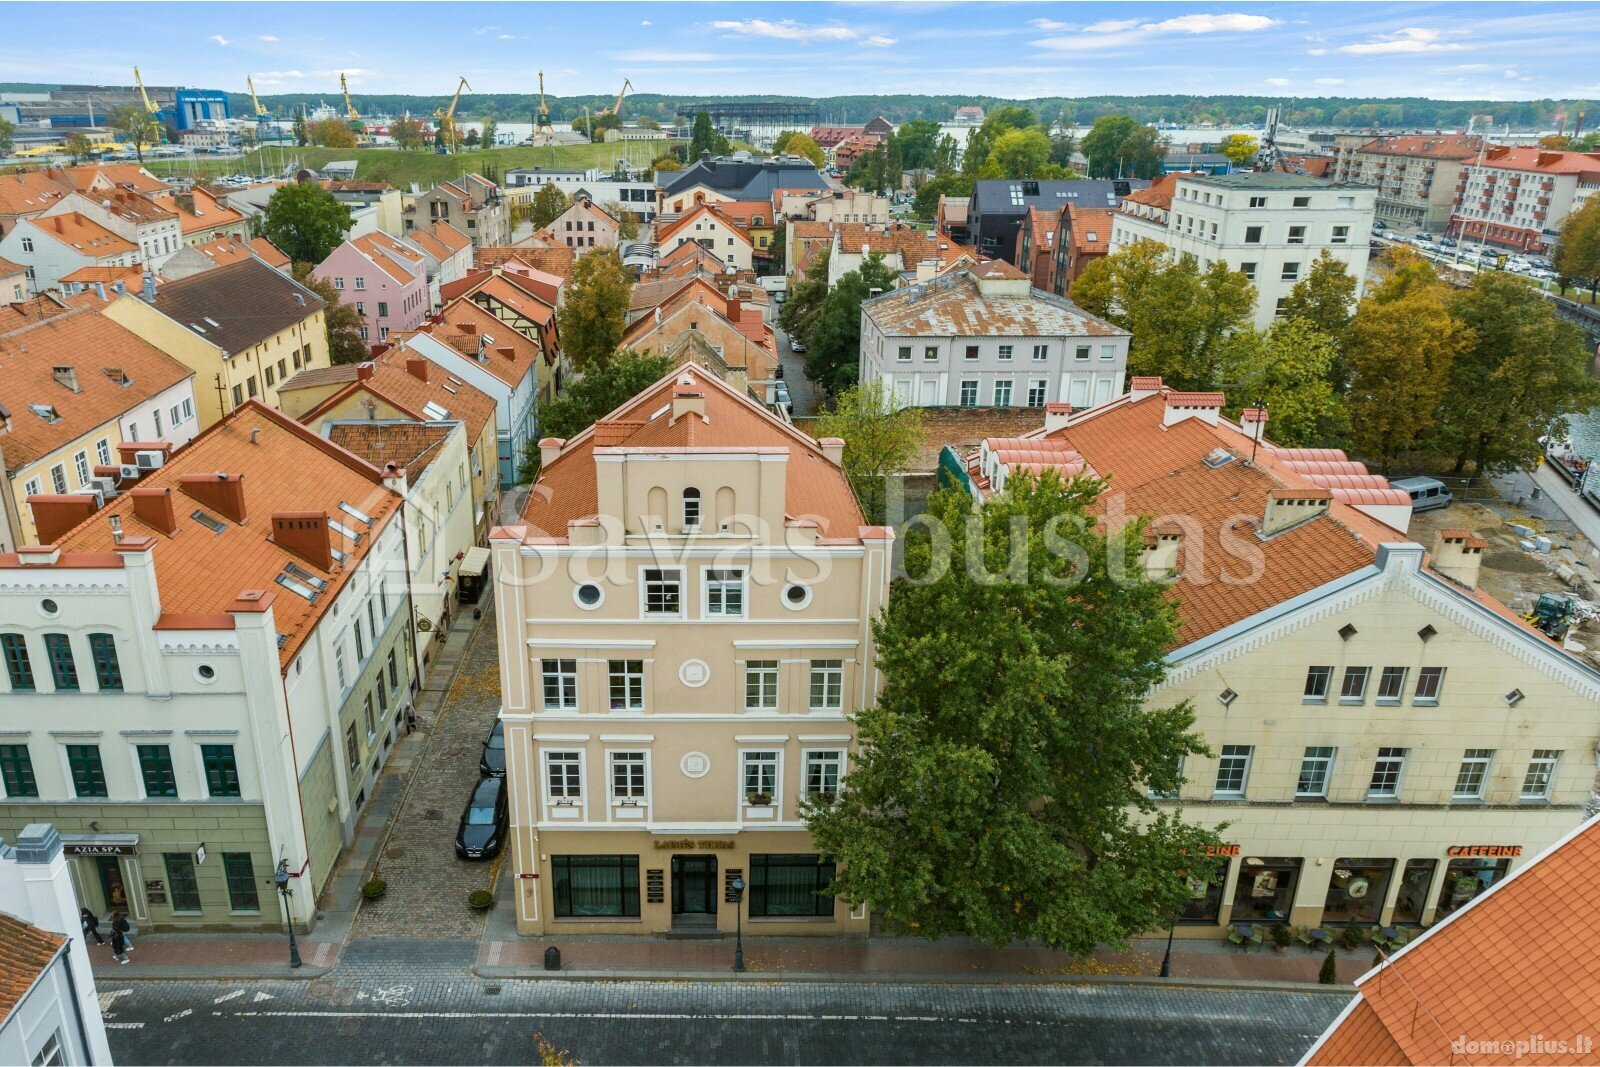 For sale Office / Tourism and recreation / Commercial/service premises Klaipėdoje, Senamiestyje